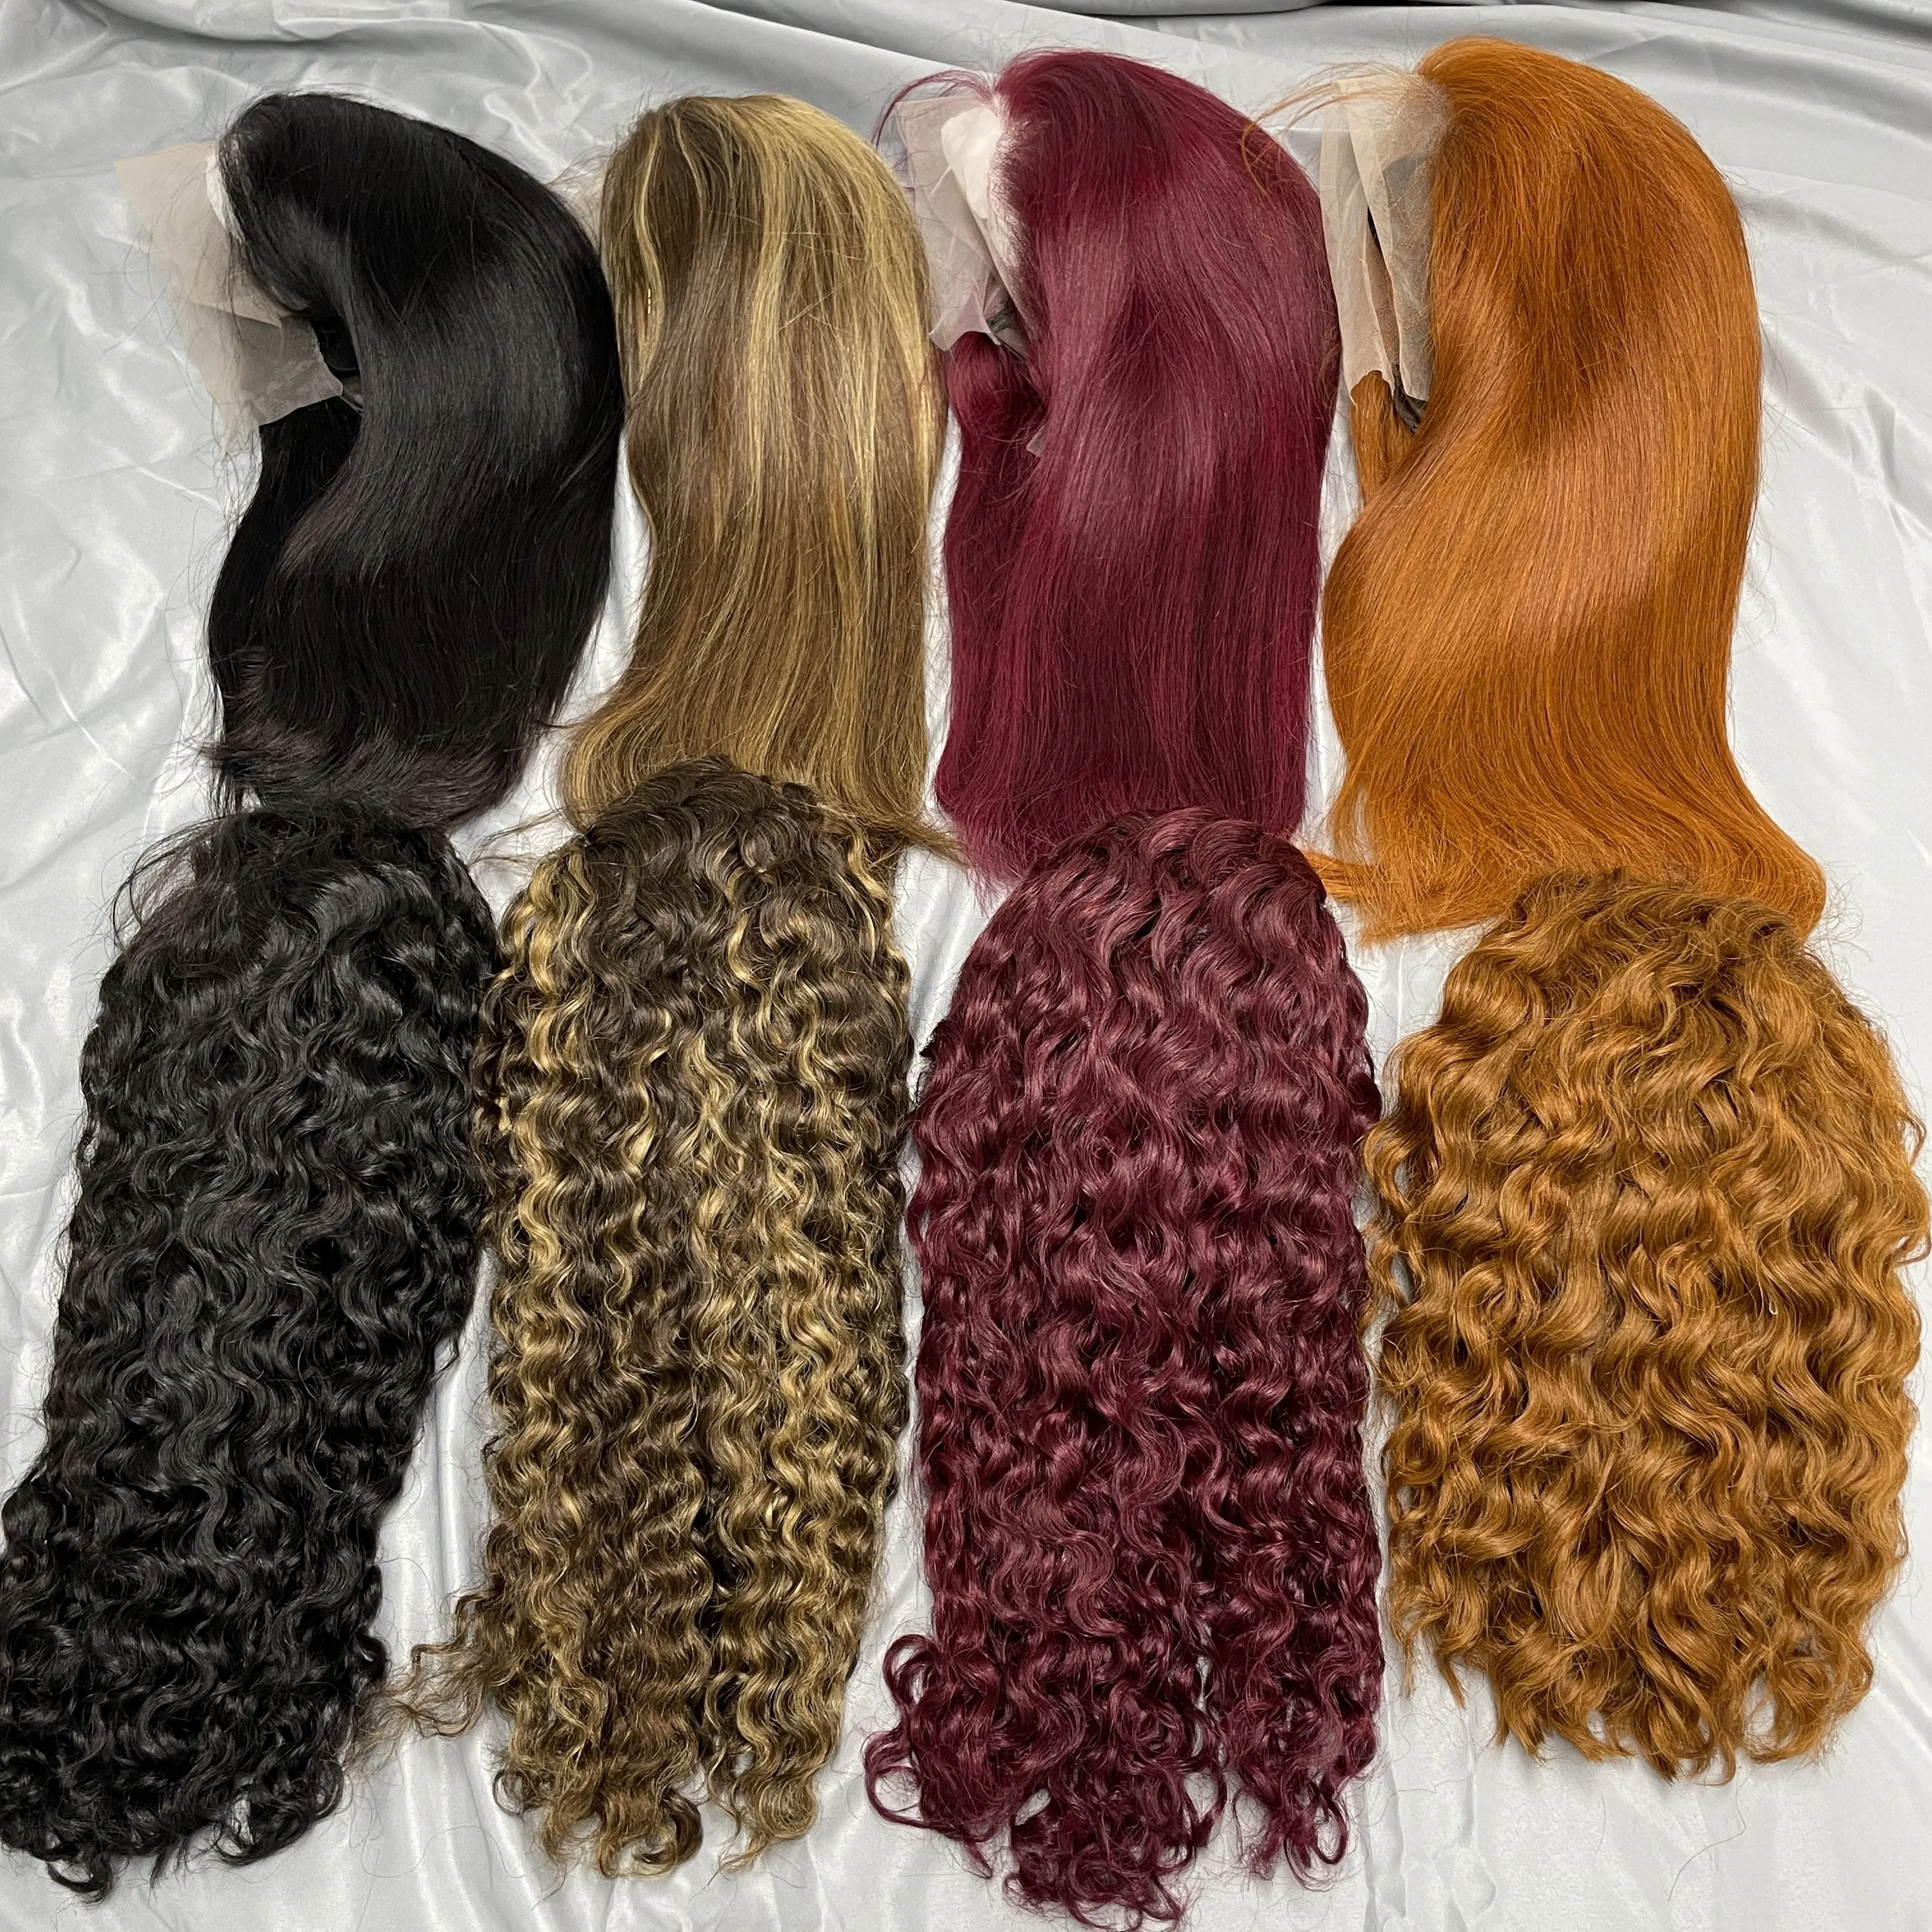 Wxjlonghair Raw Hair 12A 16 Inch parruches cheveux humaines,pelucas cabello humano,pelucas de cabello humano 100natural